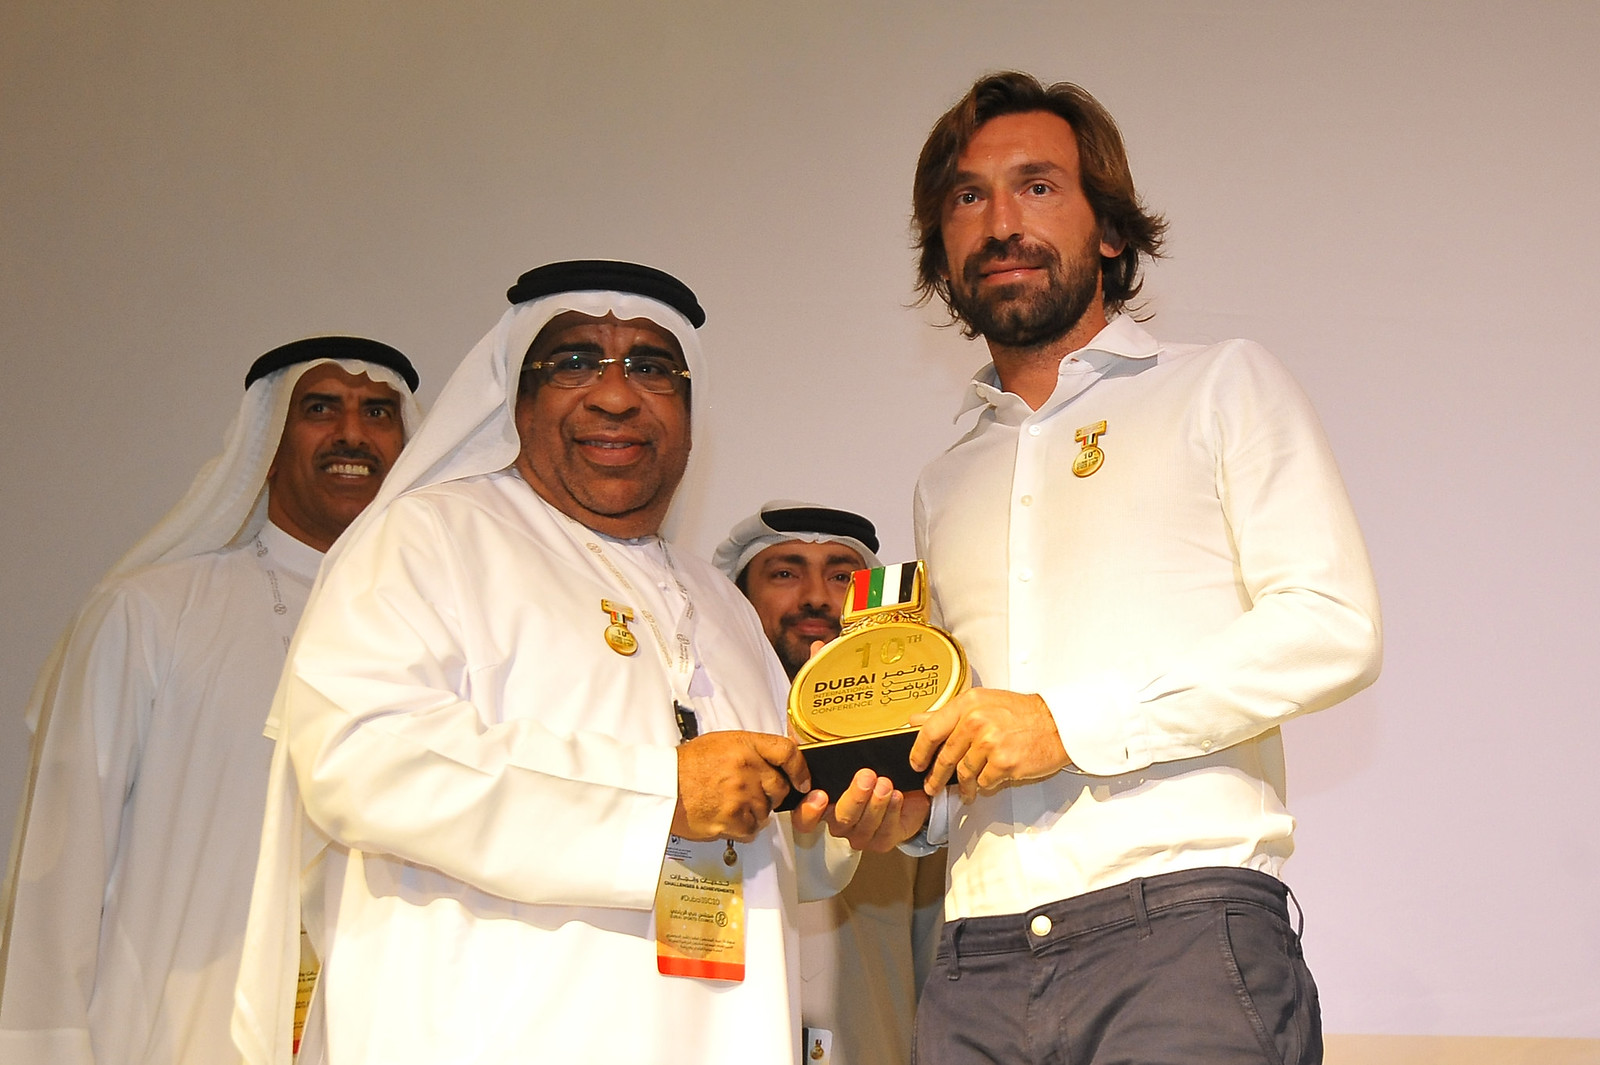 "Dubai International Sport Conference" - Workshop 4 : Football player career